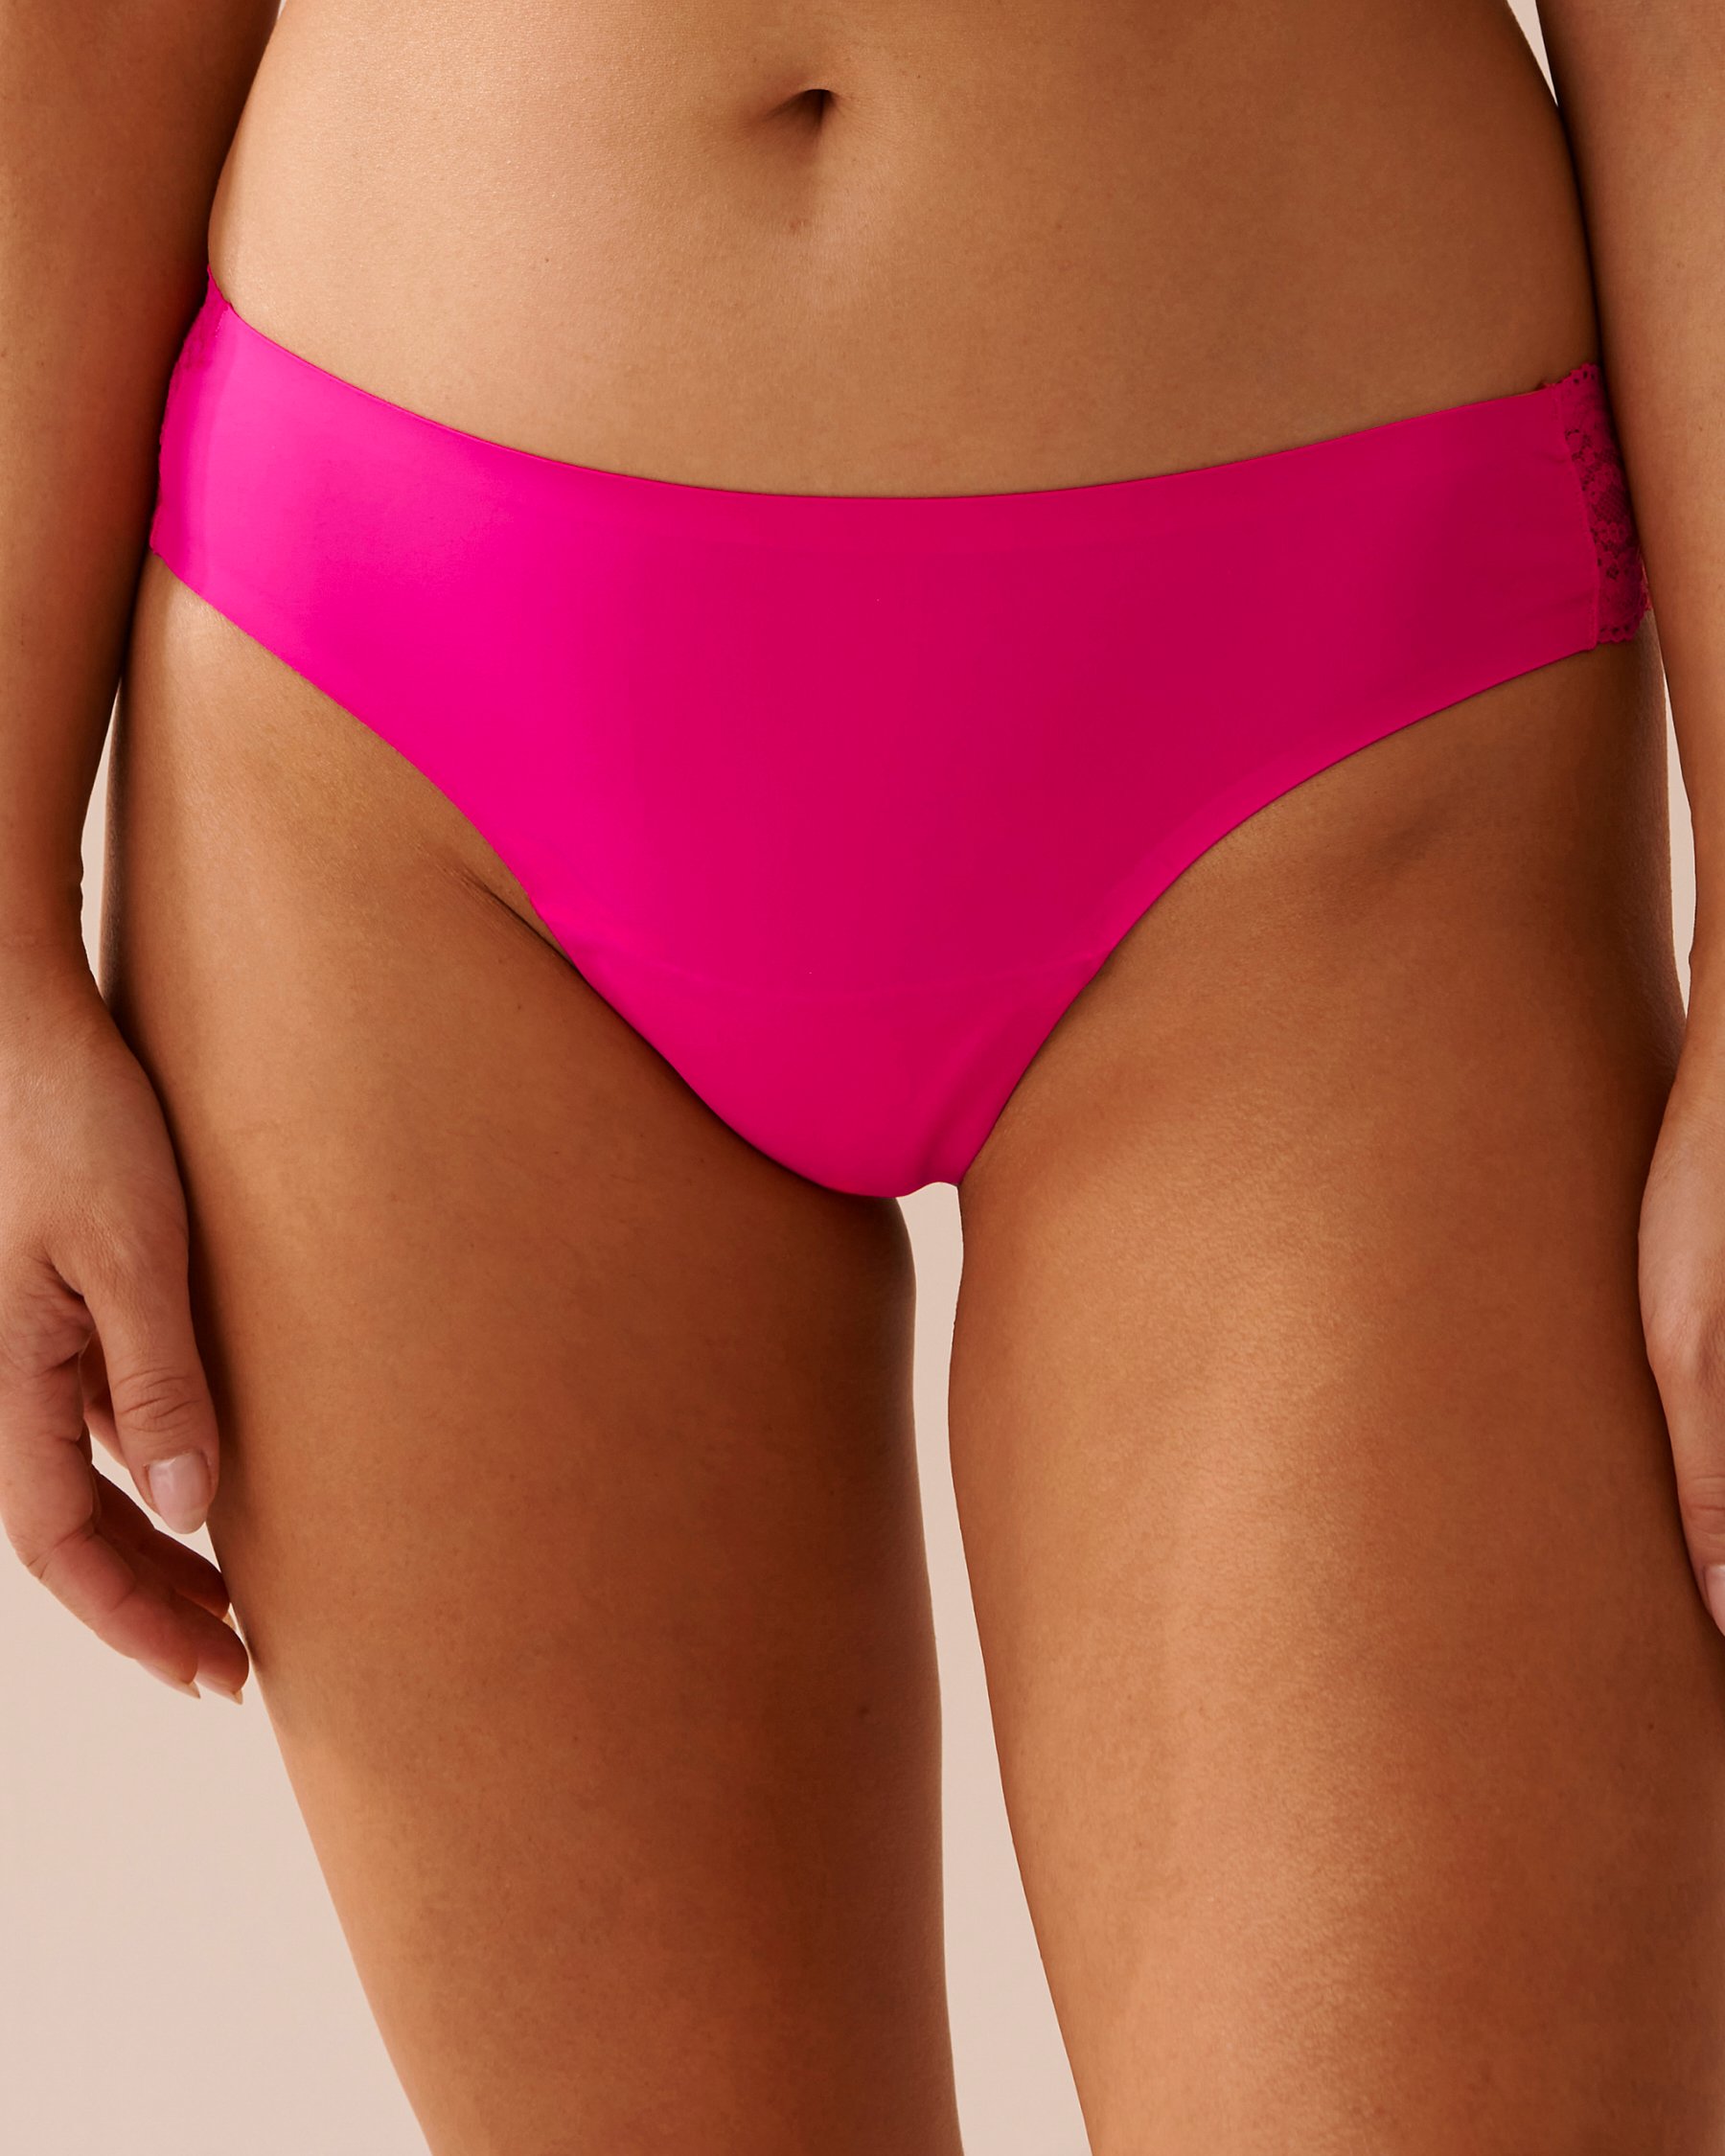 NWT Vassarette Body Curves Thong Panty Size 6 Med Rare - Memoirrose Pink